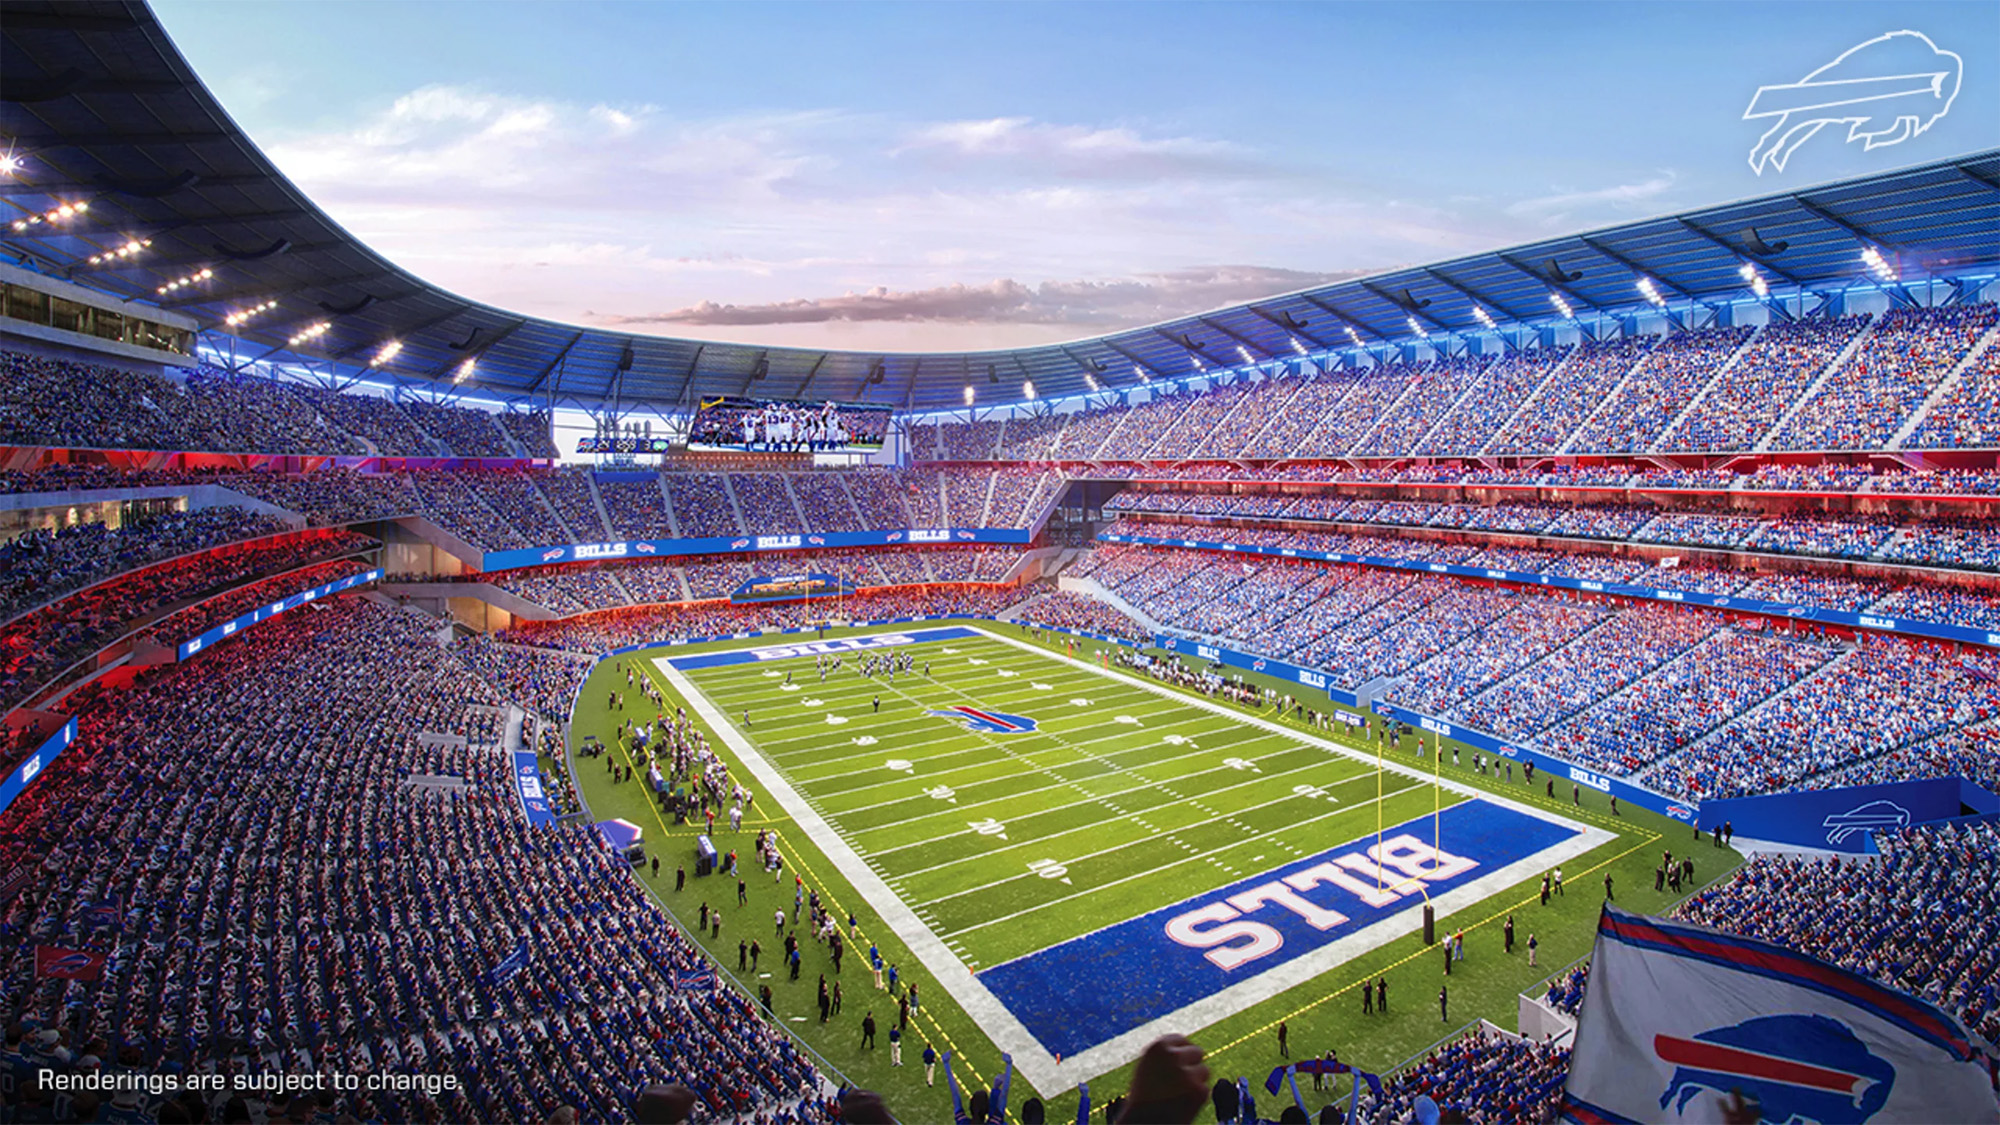 Construction begins on new Bills stadium - Football Stadium Digest